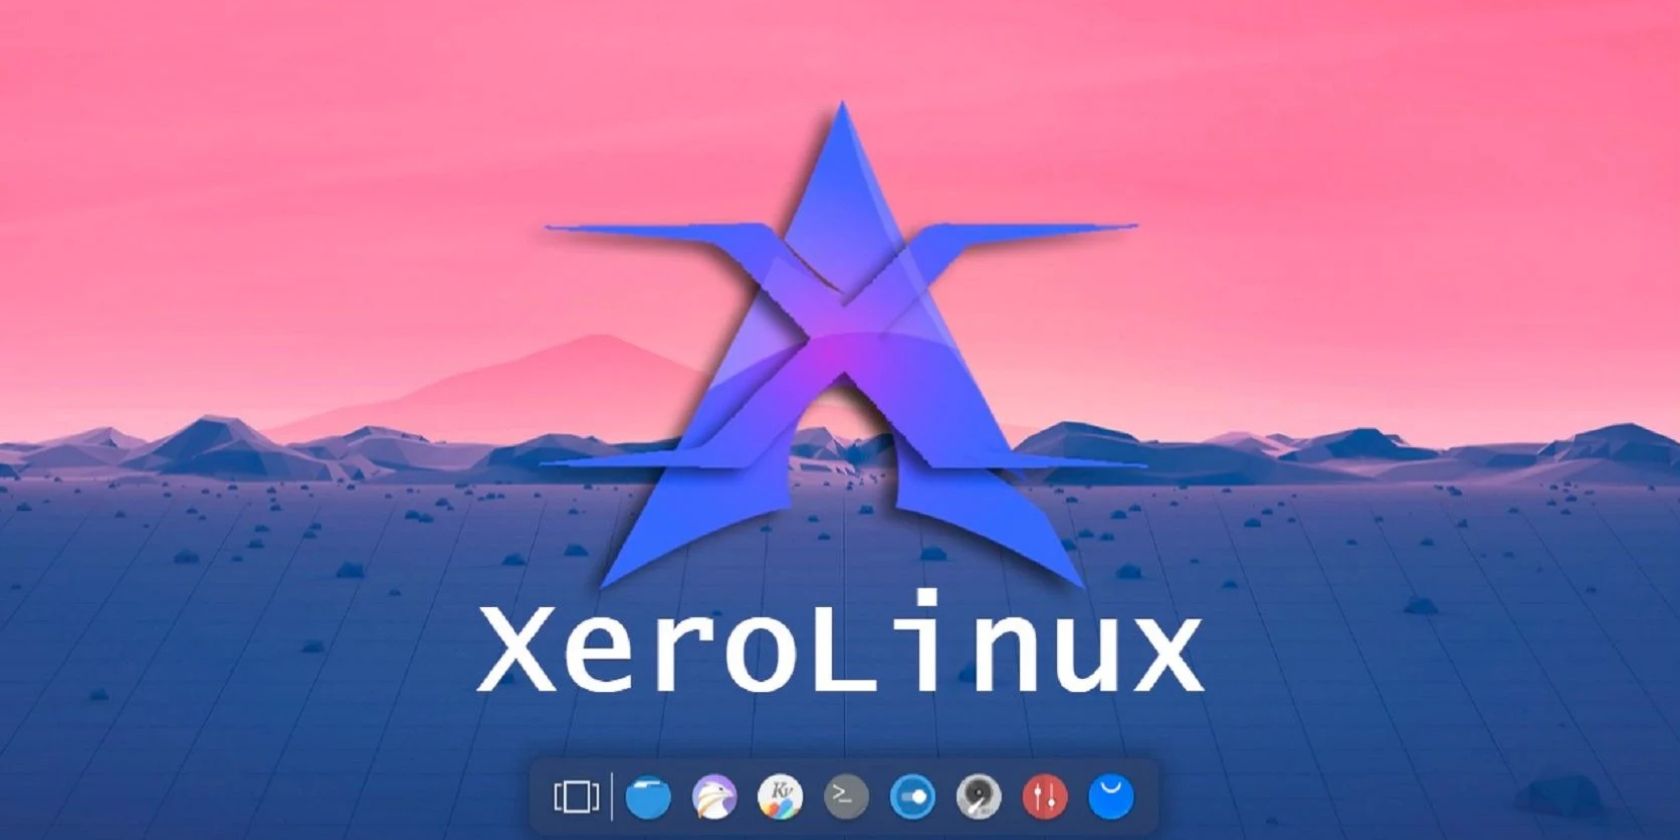 xerolinux arch-based distro